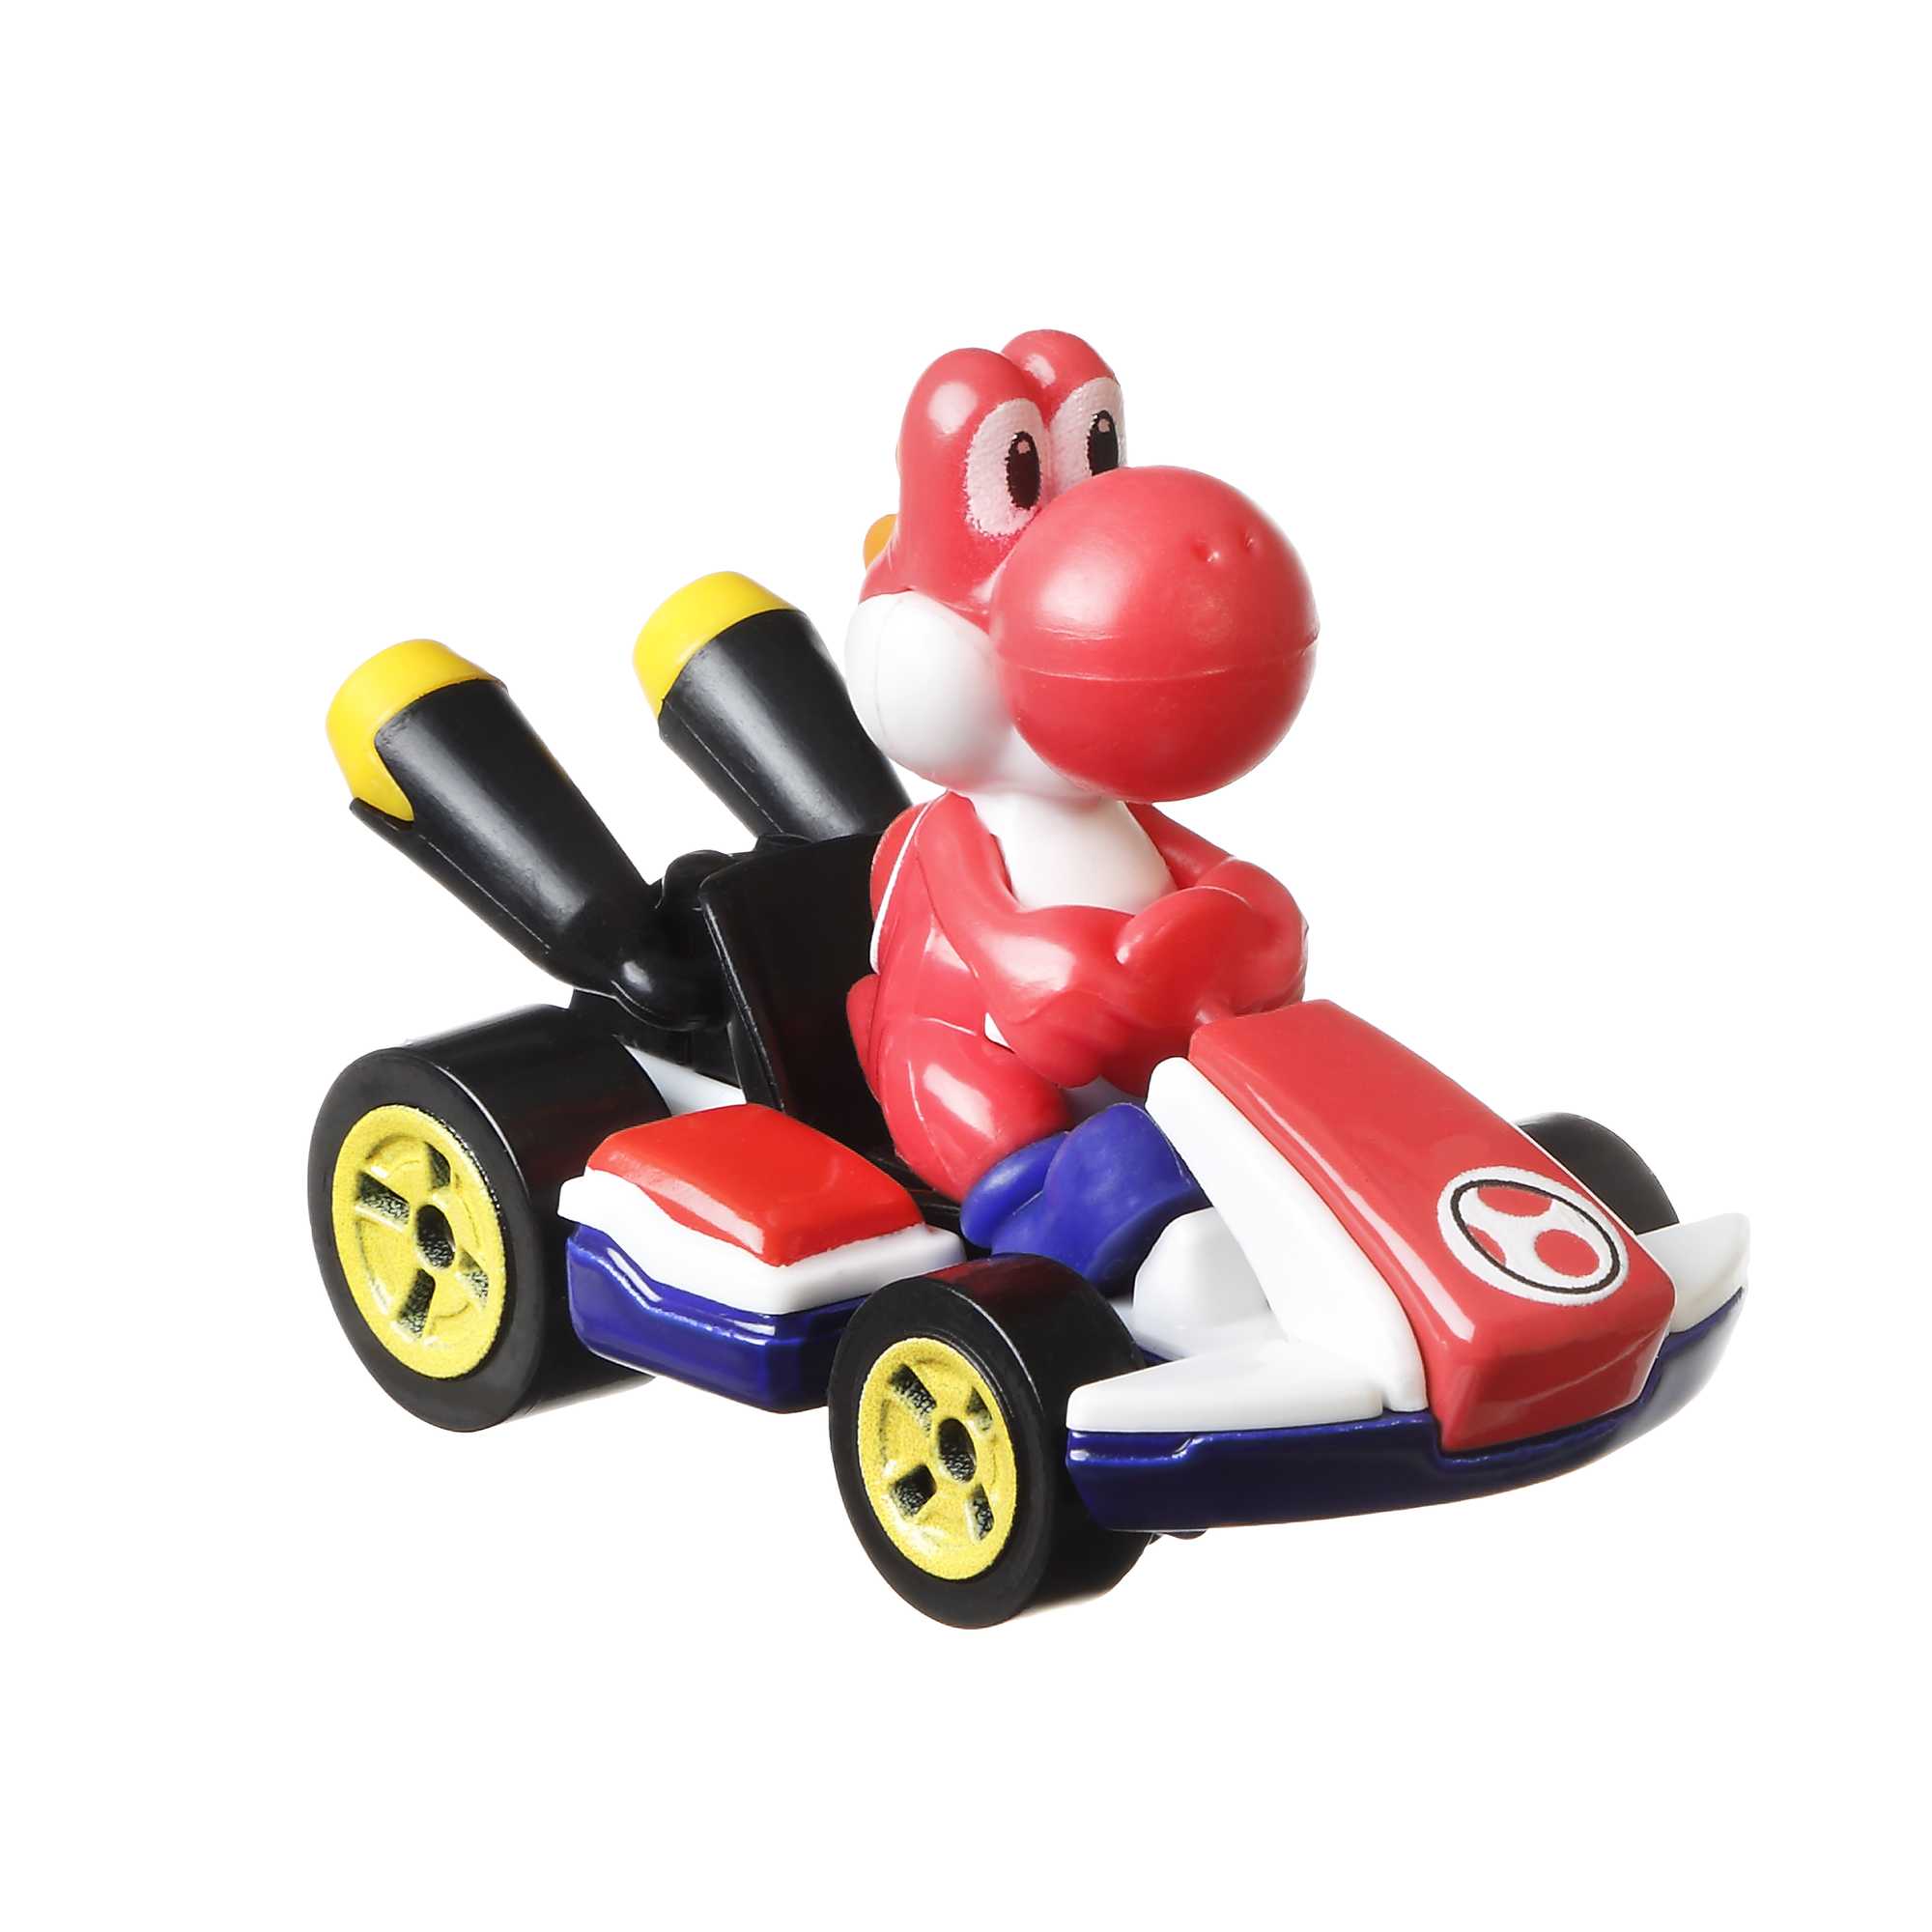 Hot Wheels 1:64 Die-Cast Mario Kart Vehicle Assortment - GBG25